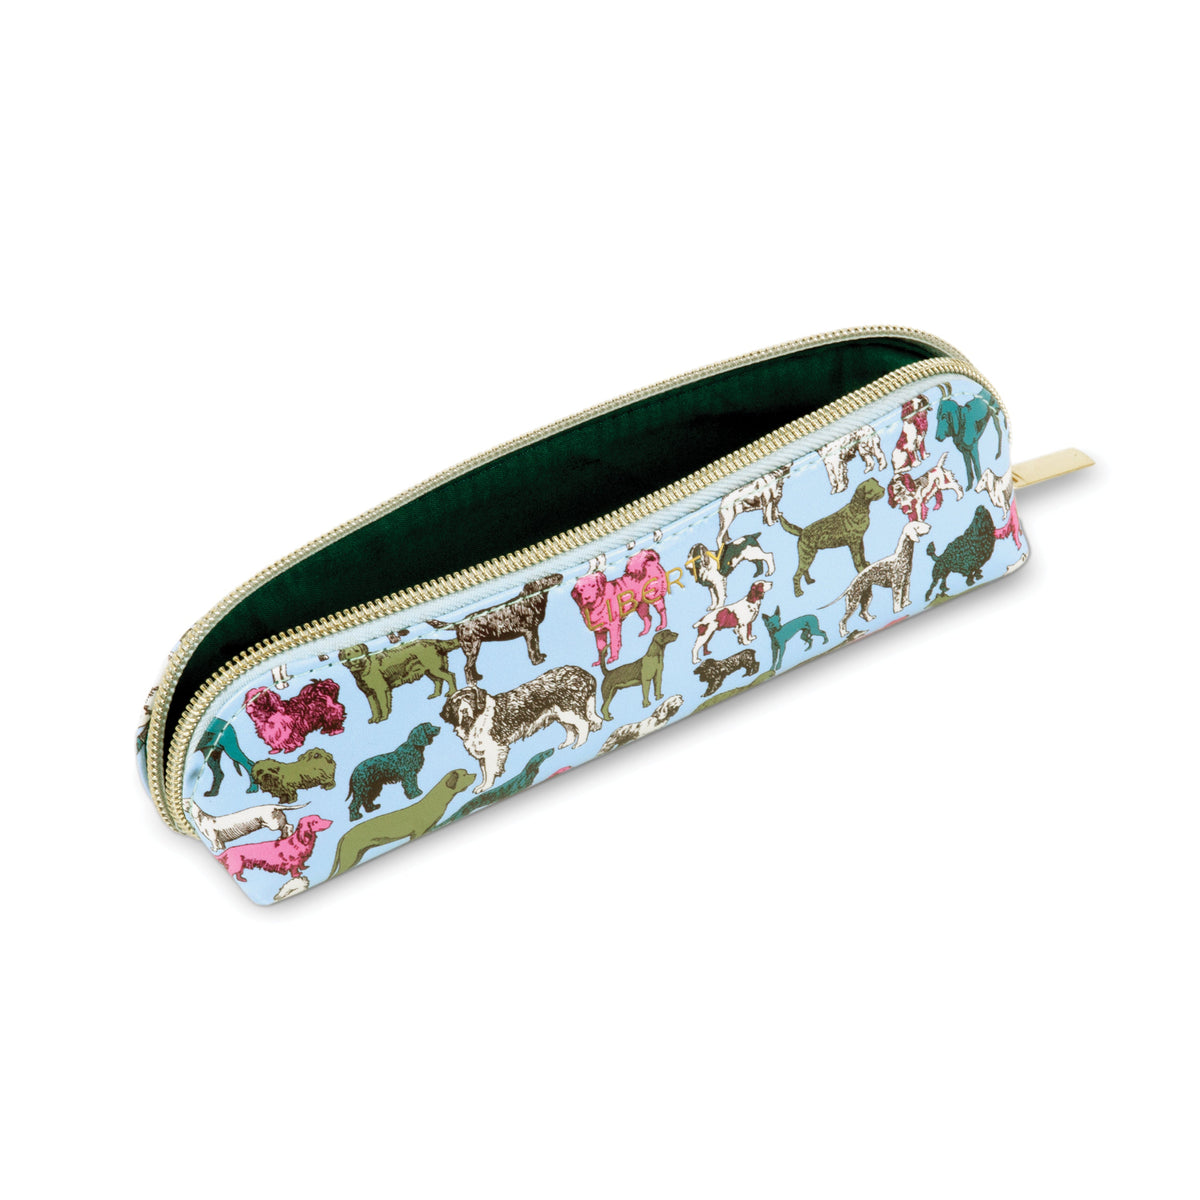 Unicorn Pencil Case Large Capacity For Girls Assorted Design